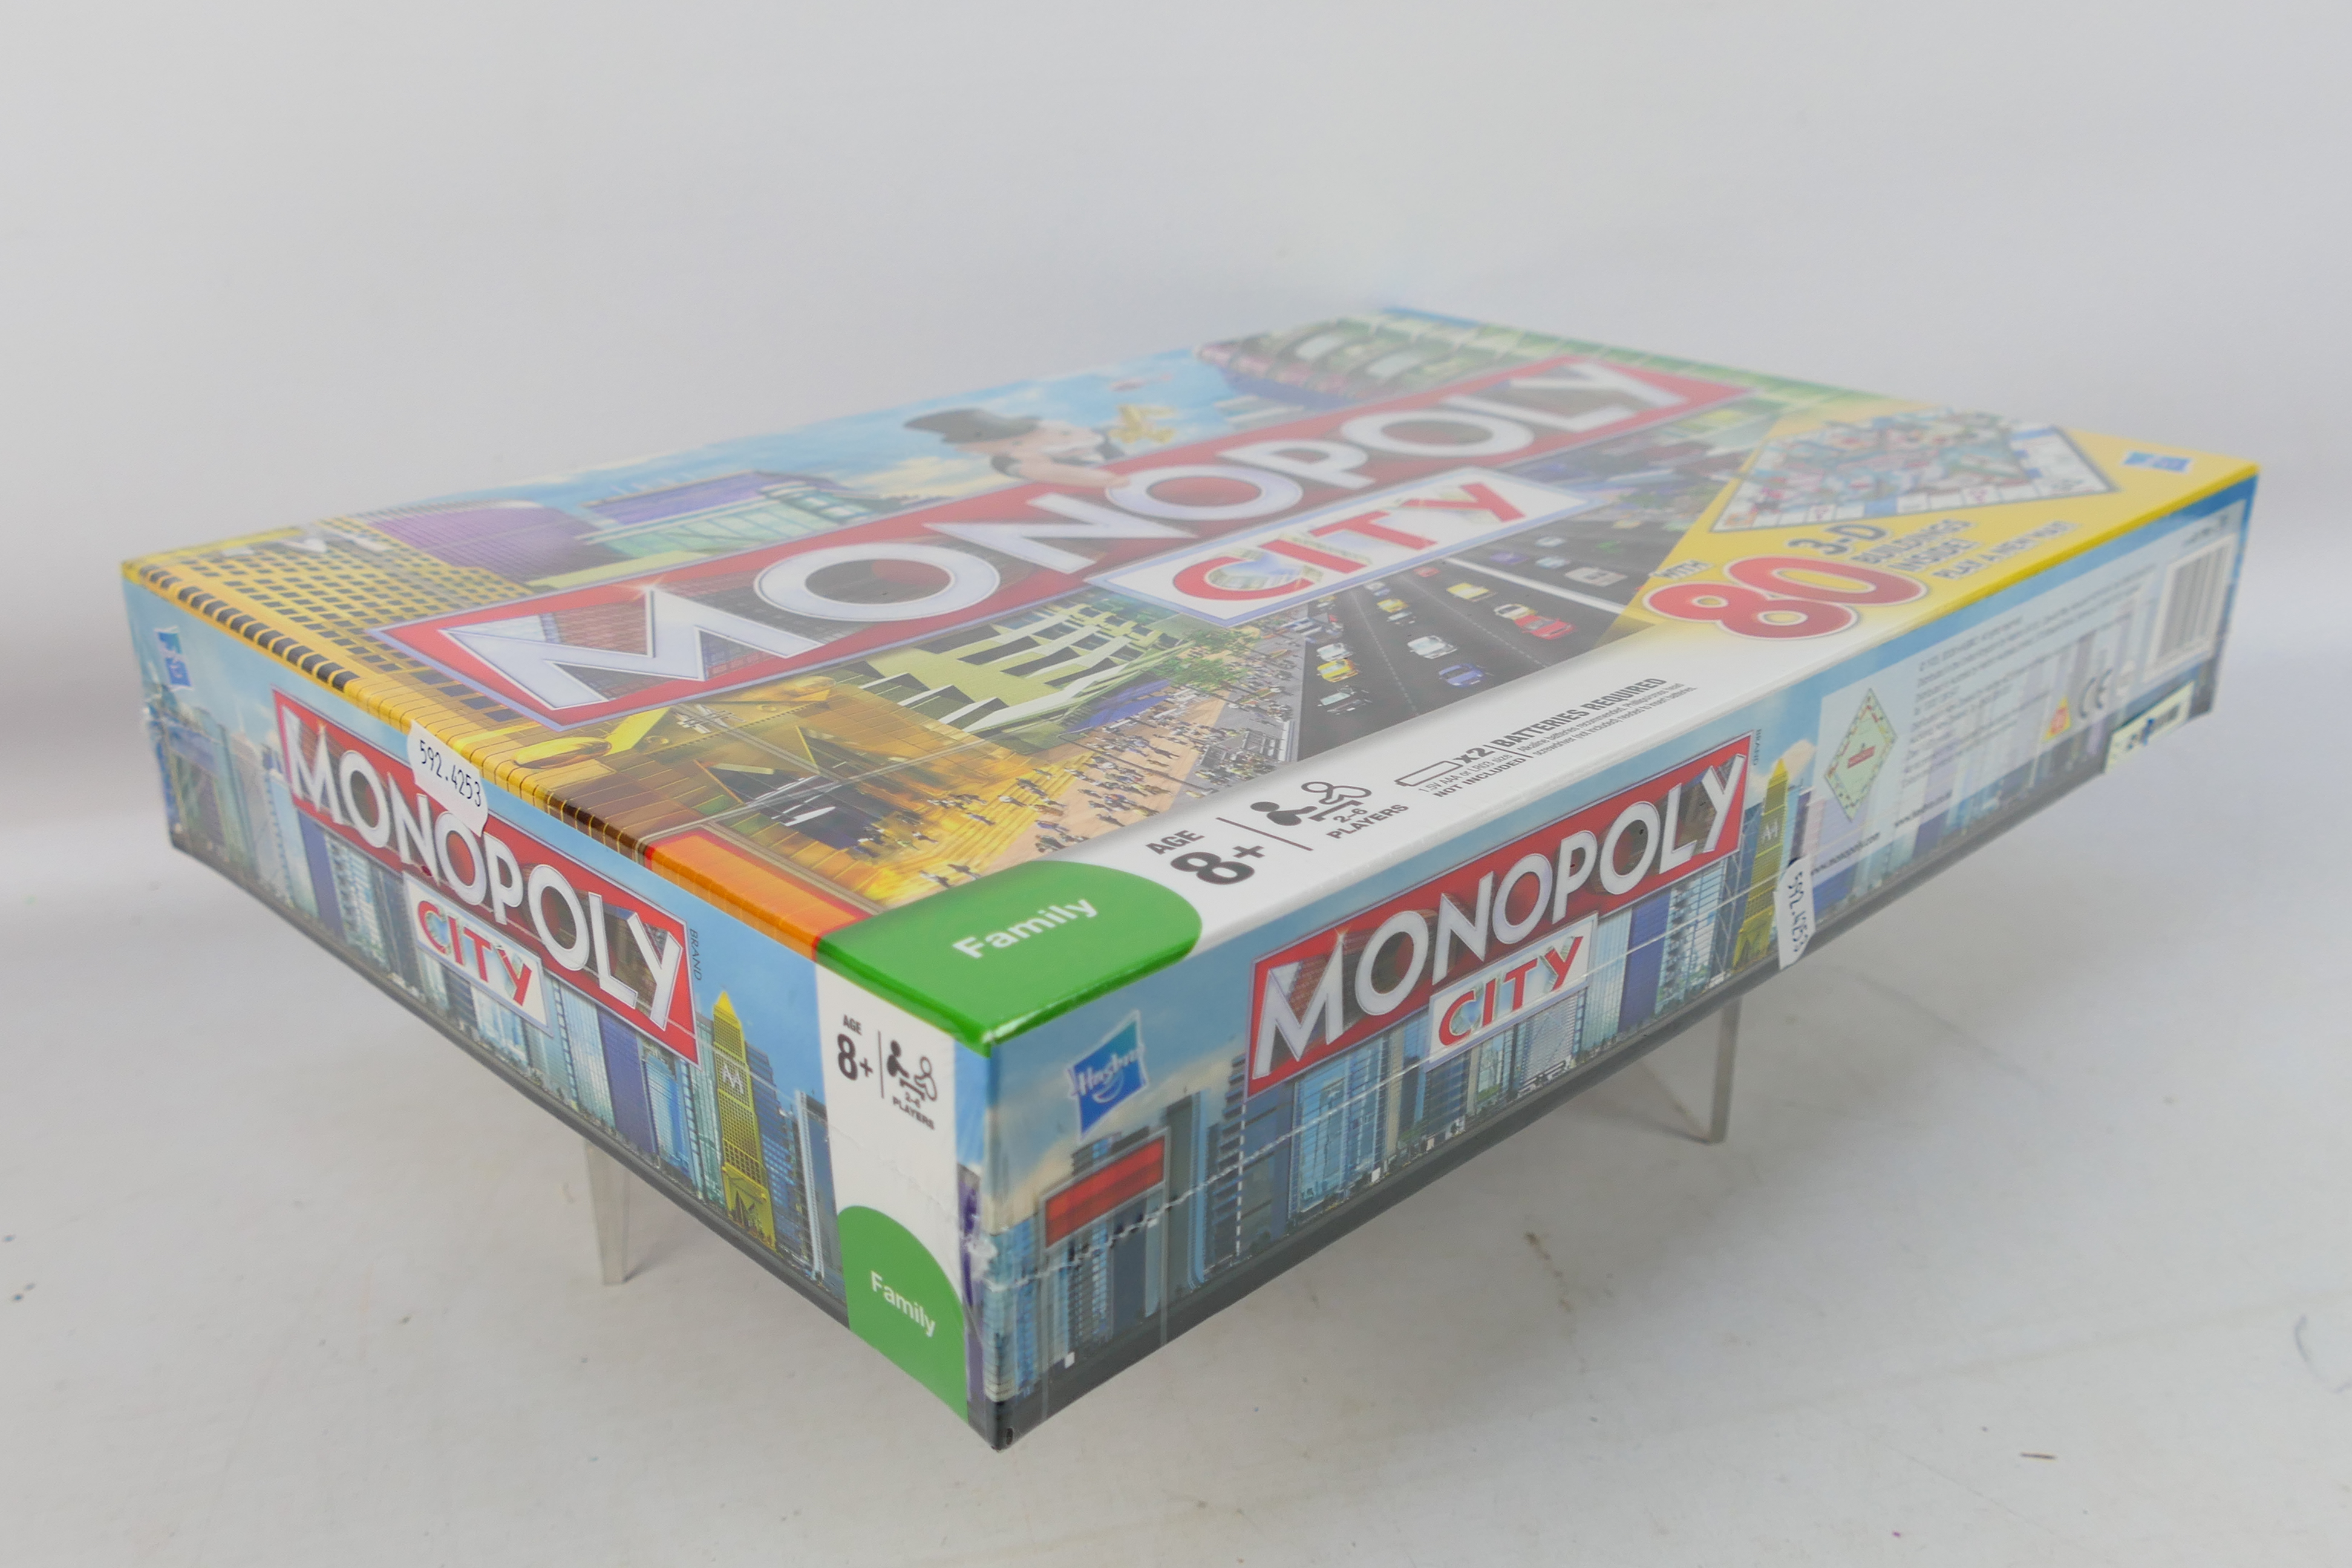 Hasbro - Monopoly - An unopened Monopoly - Image 3 of 3